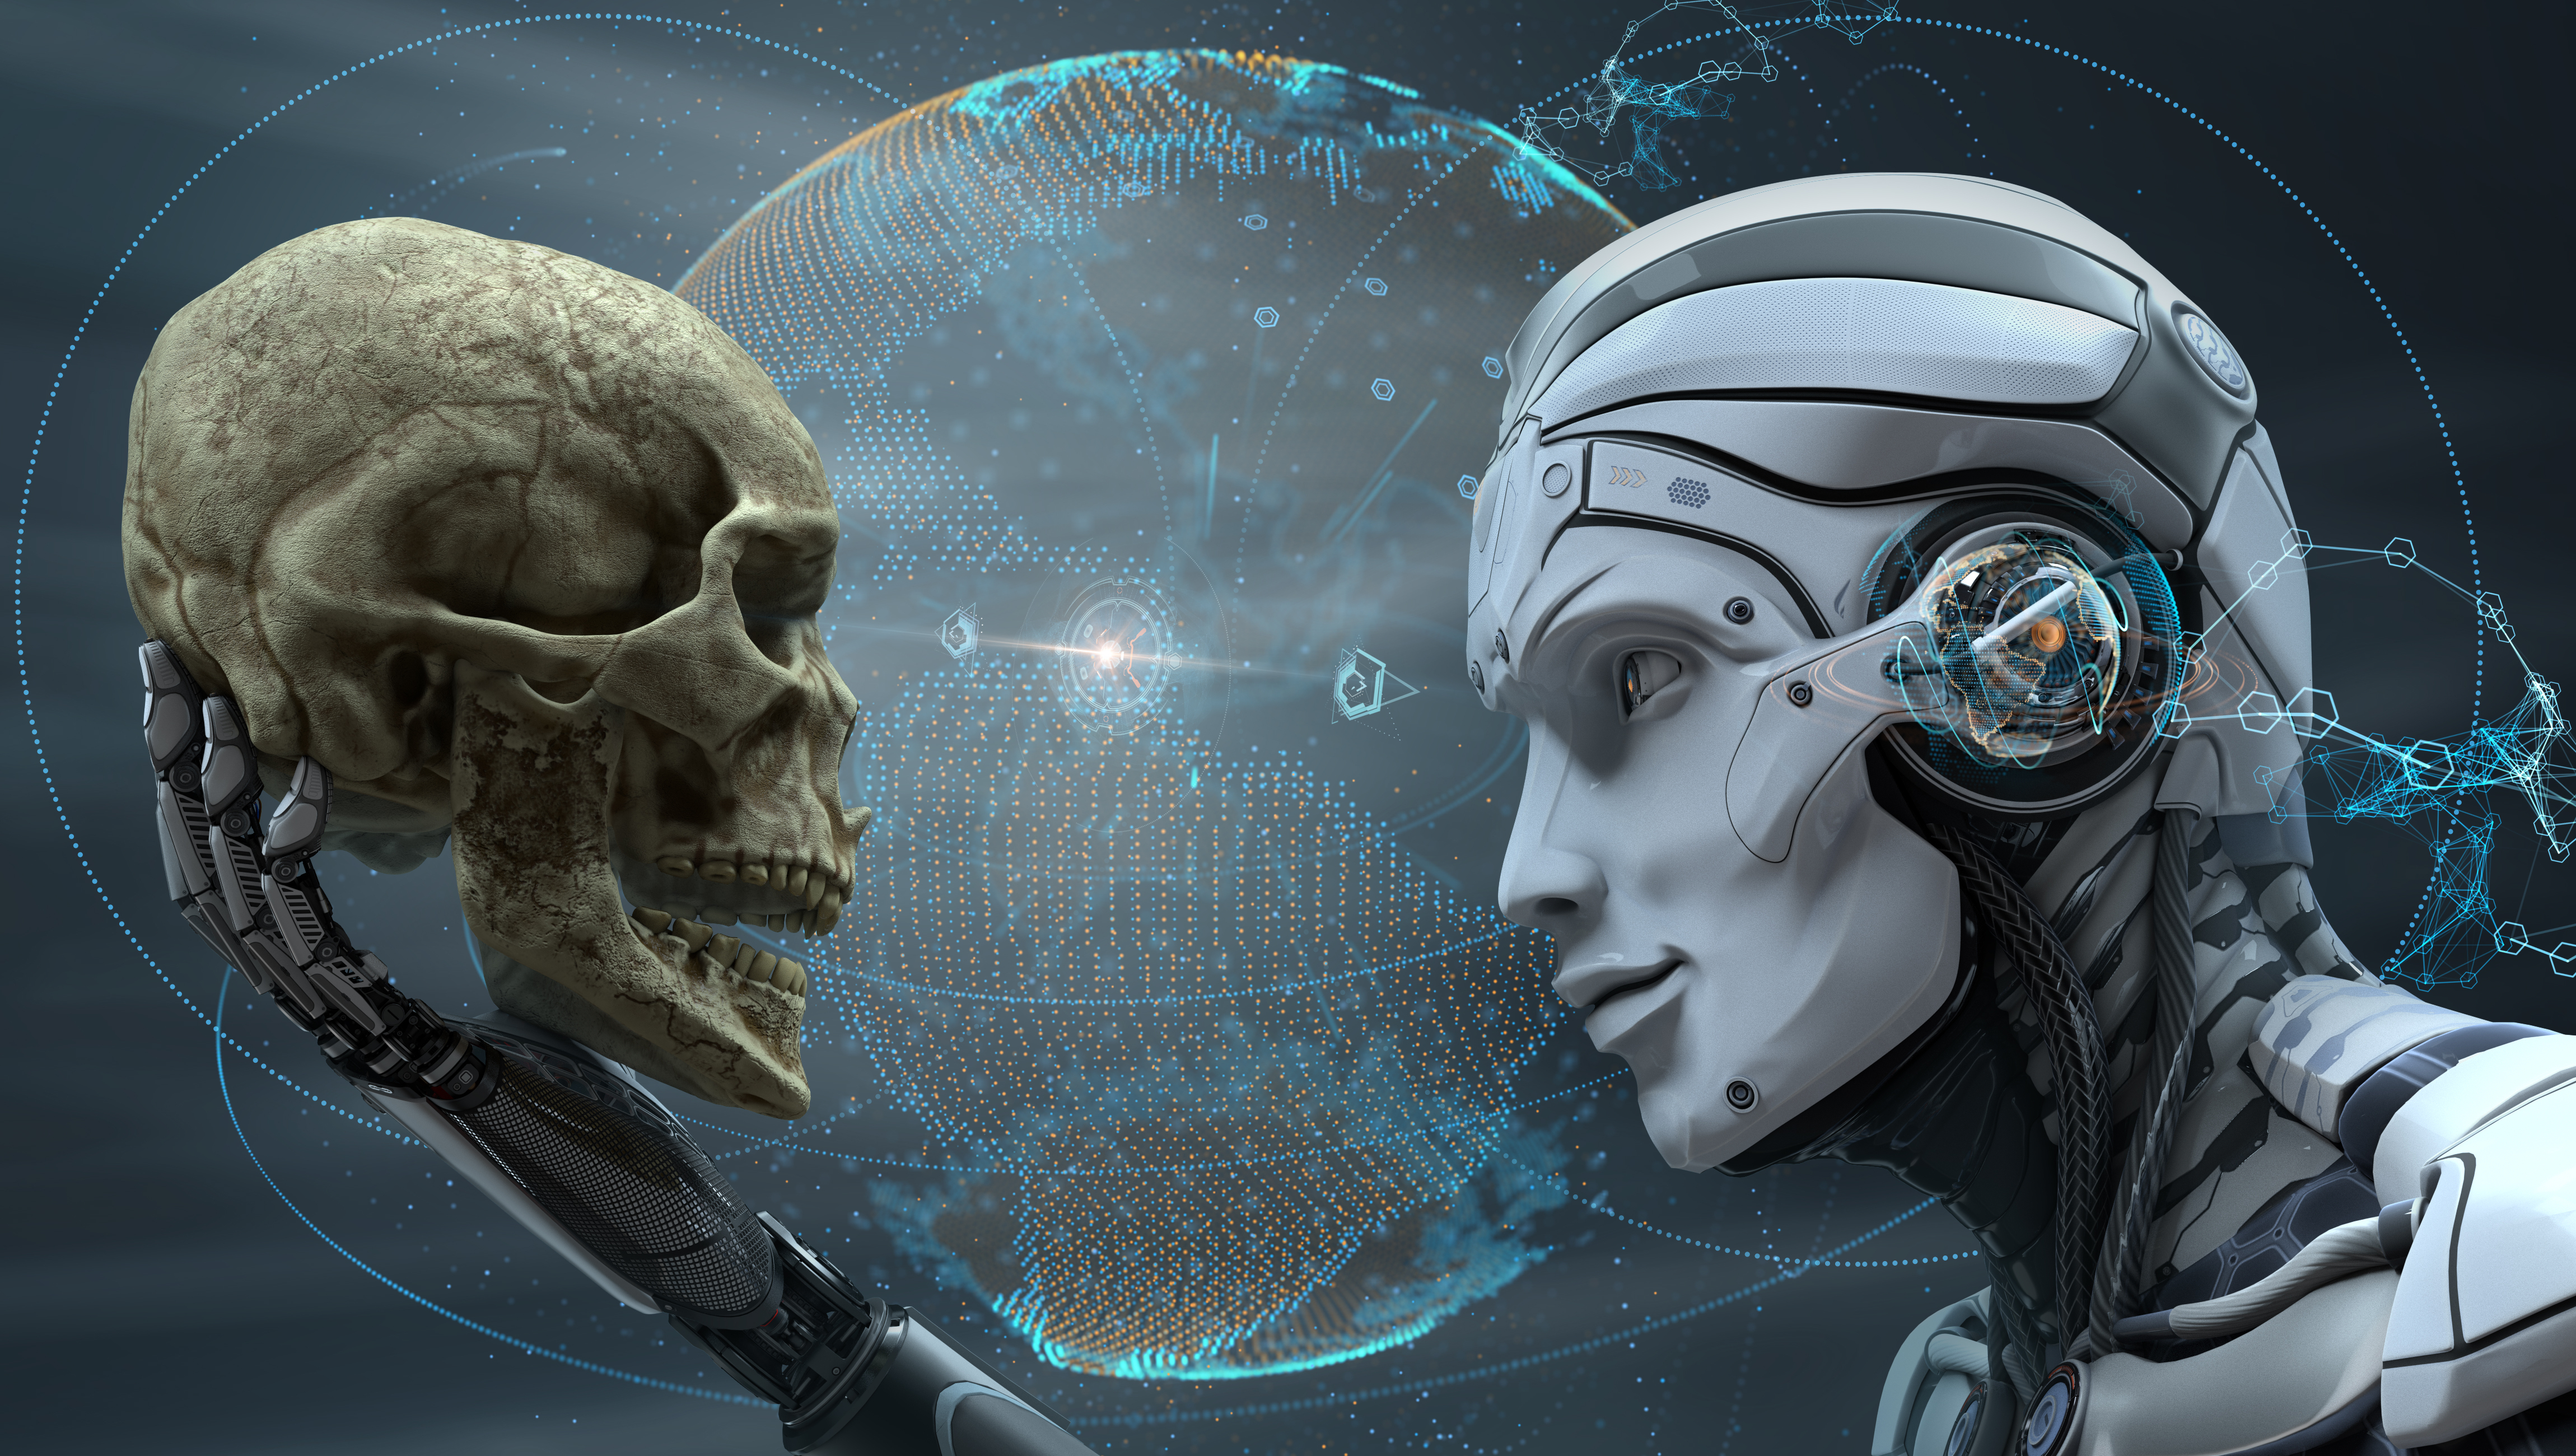 Cyborg Skull Futuristic Evolution Robot Tech Human Android William Shakespeare Digital Art 4600x2600